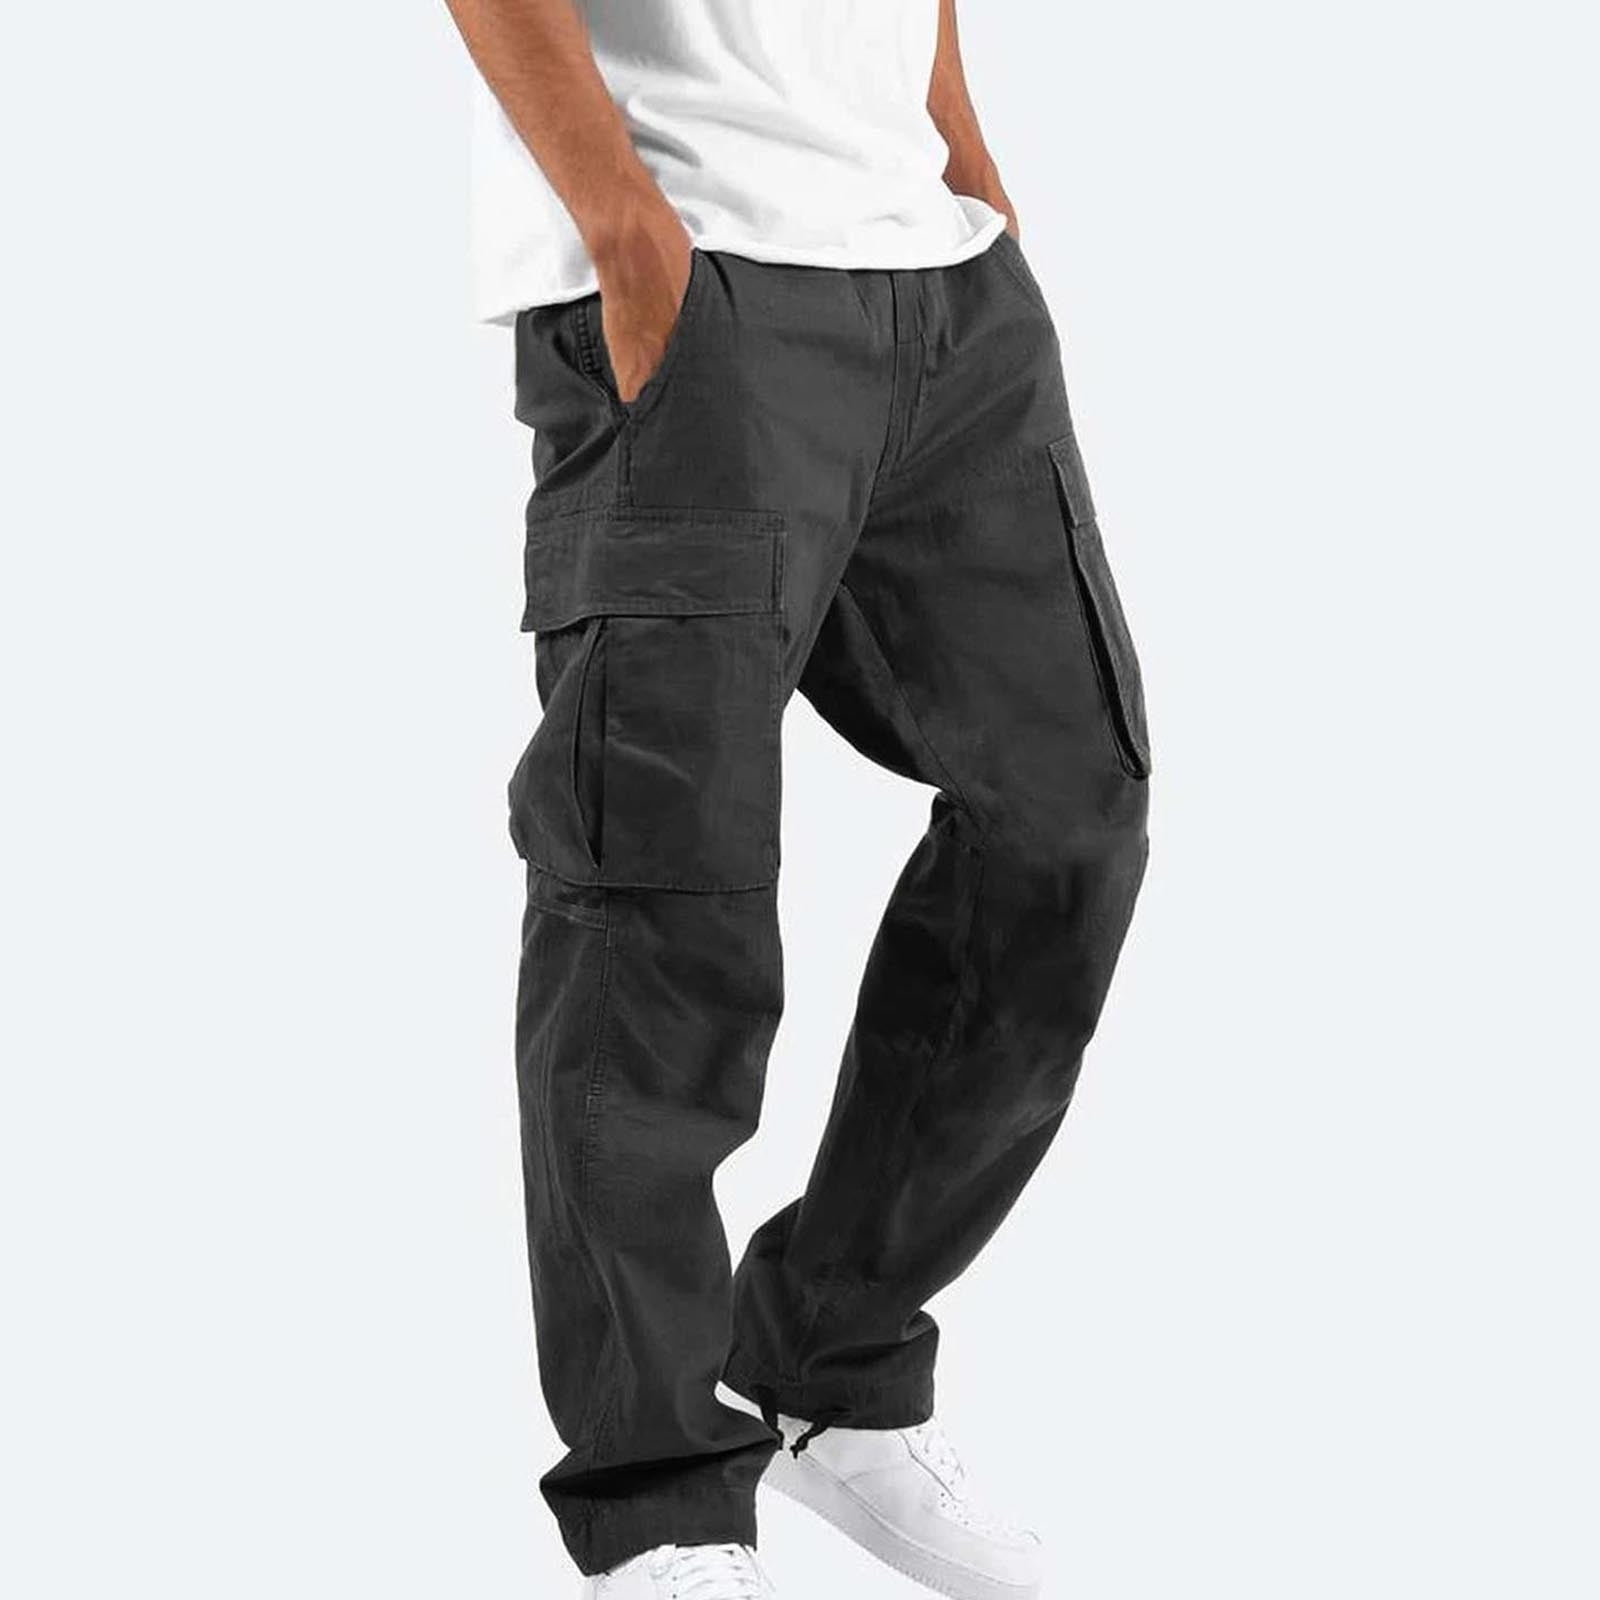 Shop Black Cargo Pants Online For Men & Women At Best Offers From PUMA-mncb.edu.vn